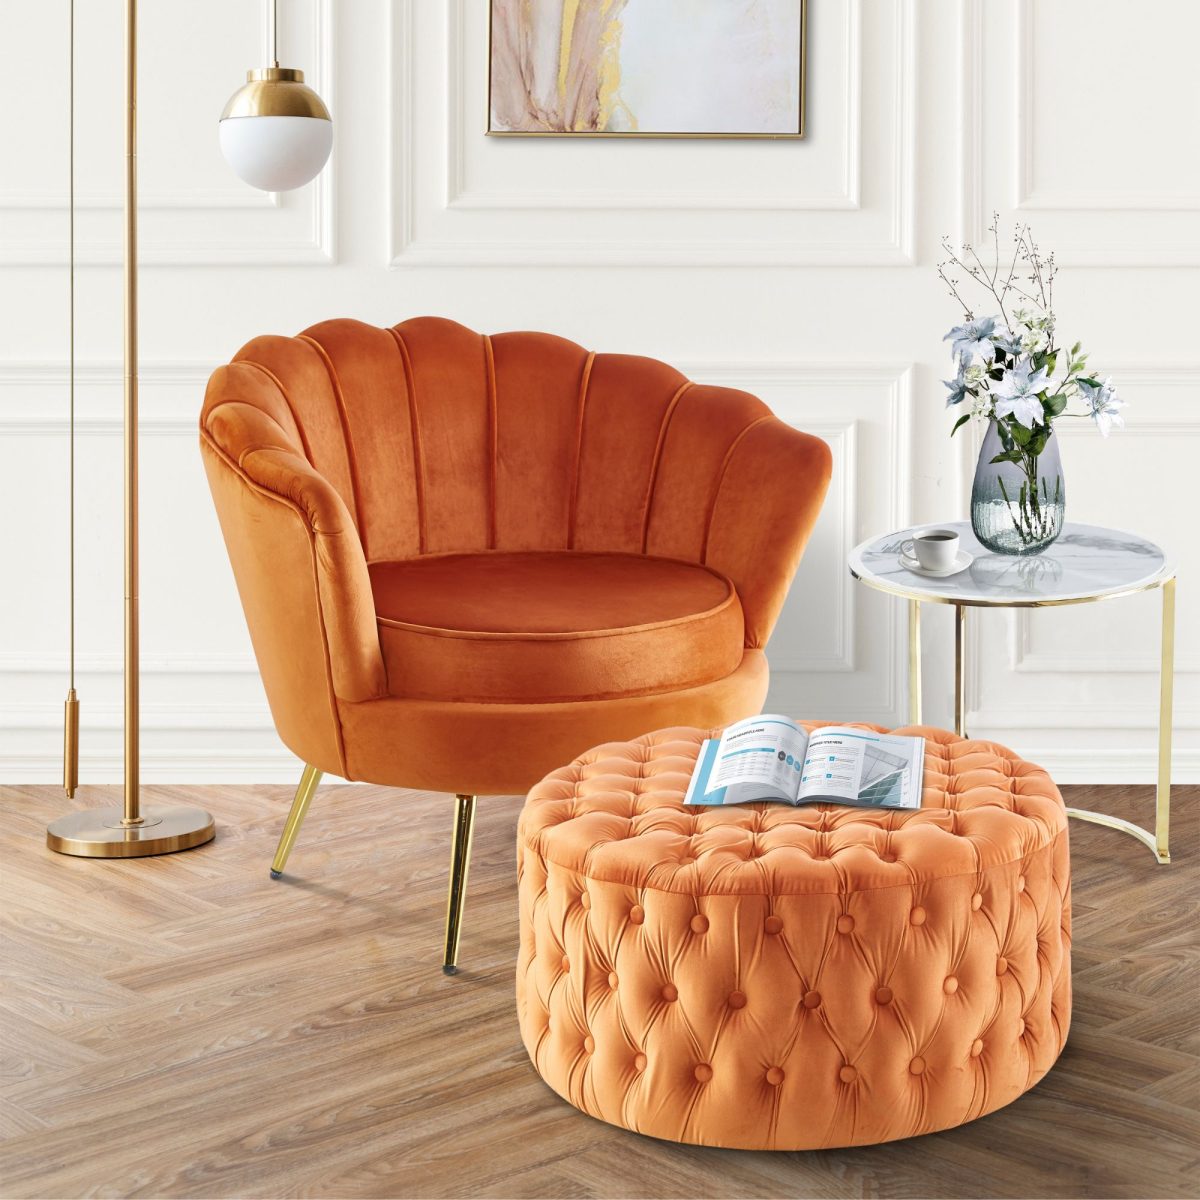 Cosmos Tufted Velvet Fabric Round Ottoman Footstools – Cinnamon